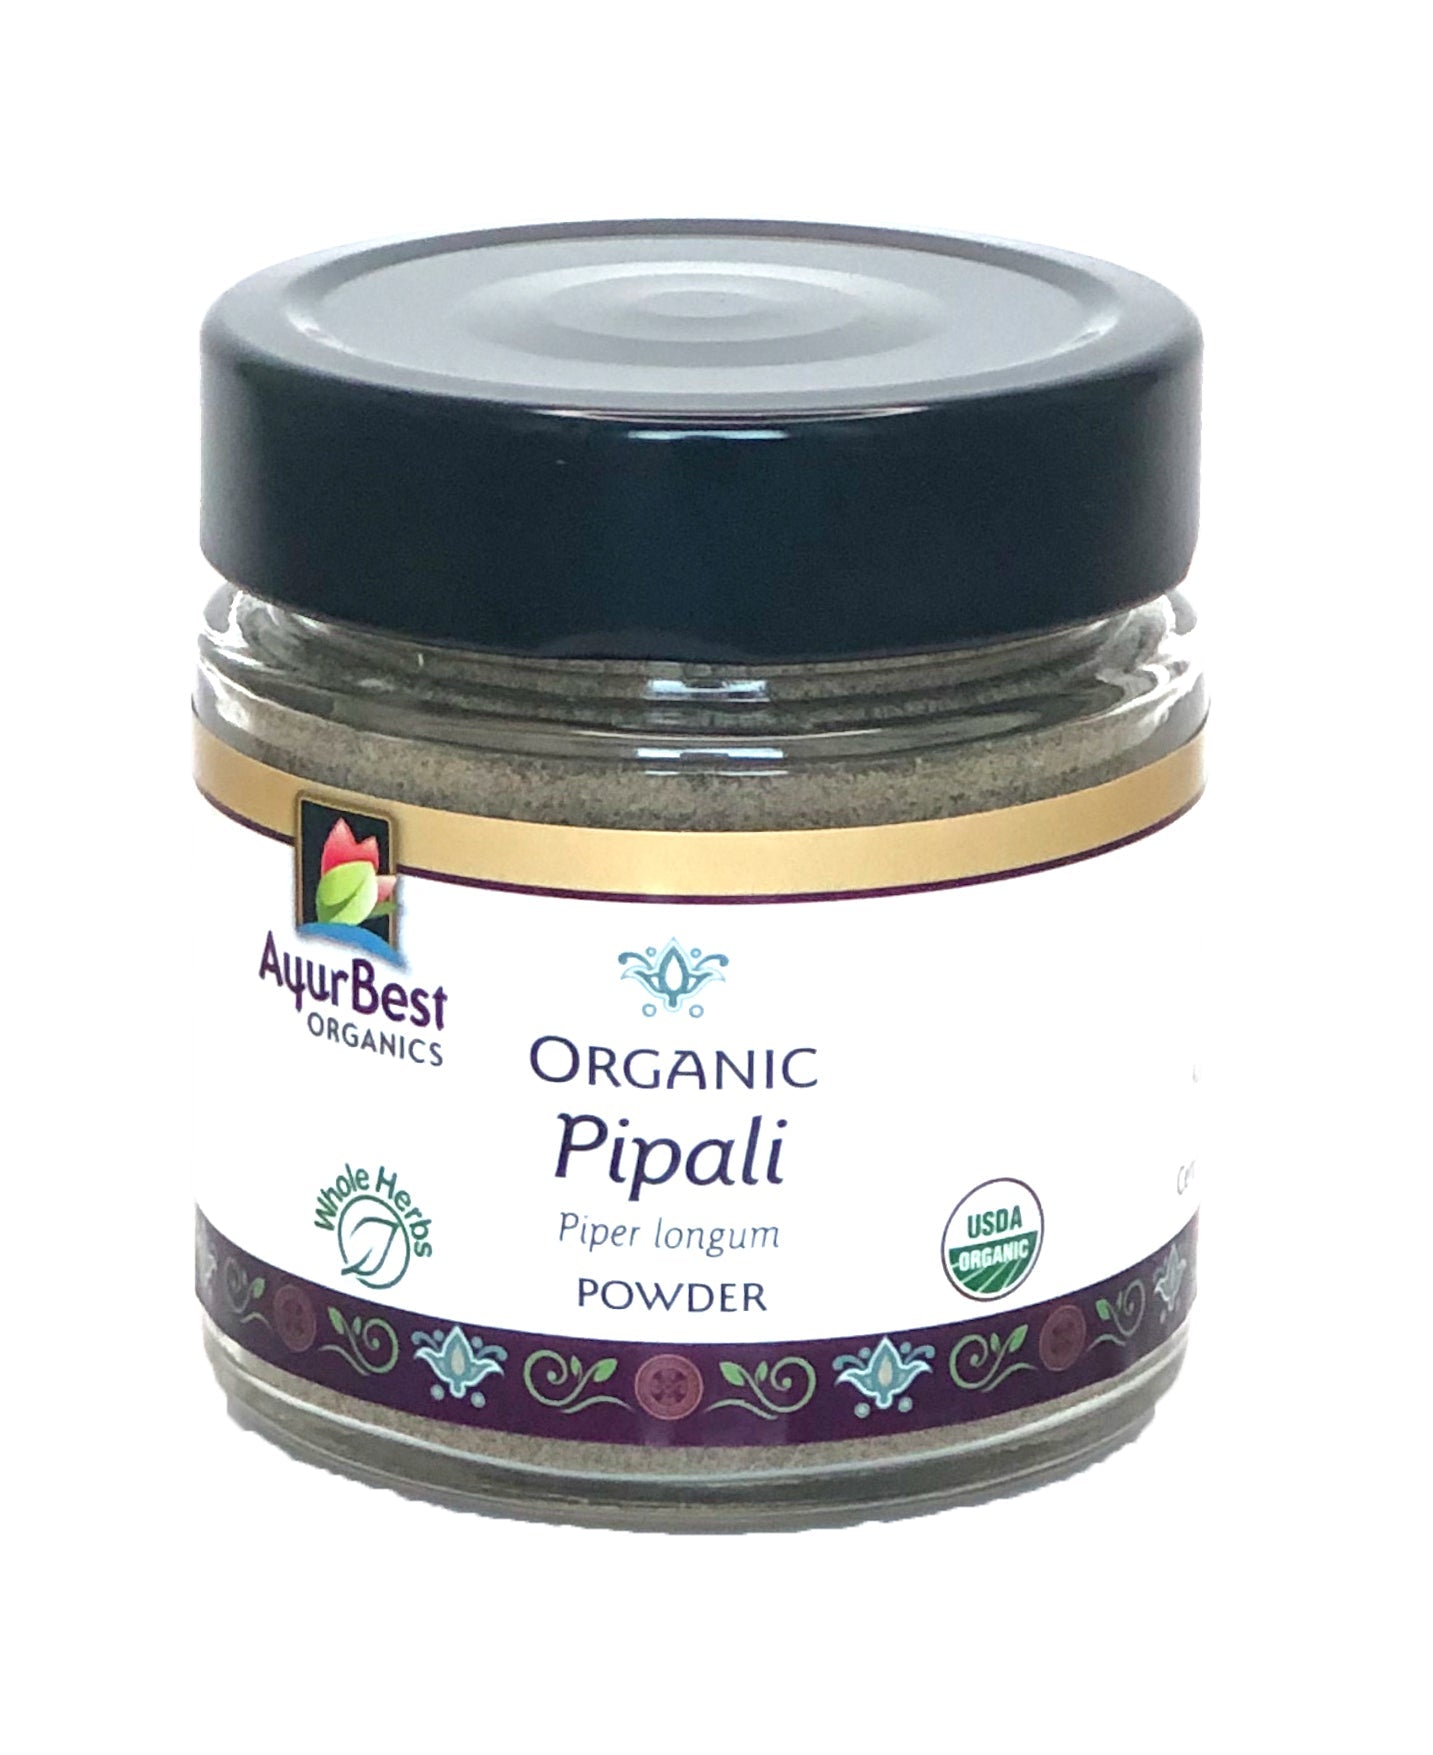 Wholesale Spices & Herbs - Pippali Powder, Organic 4.8oz (137.3g) Jar